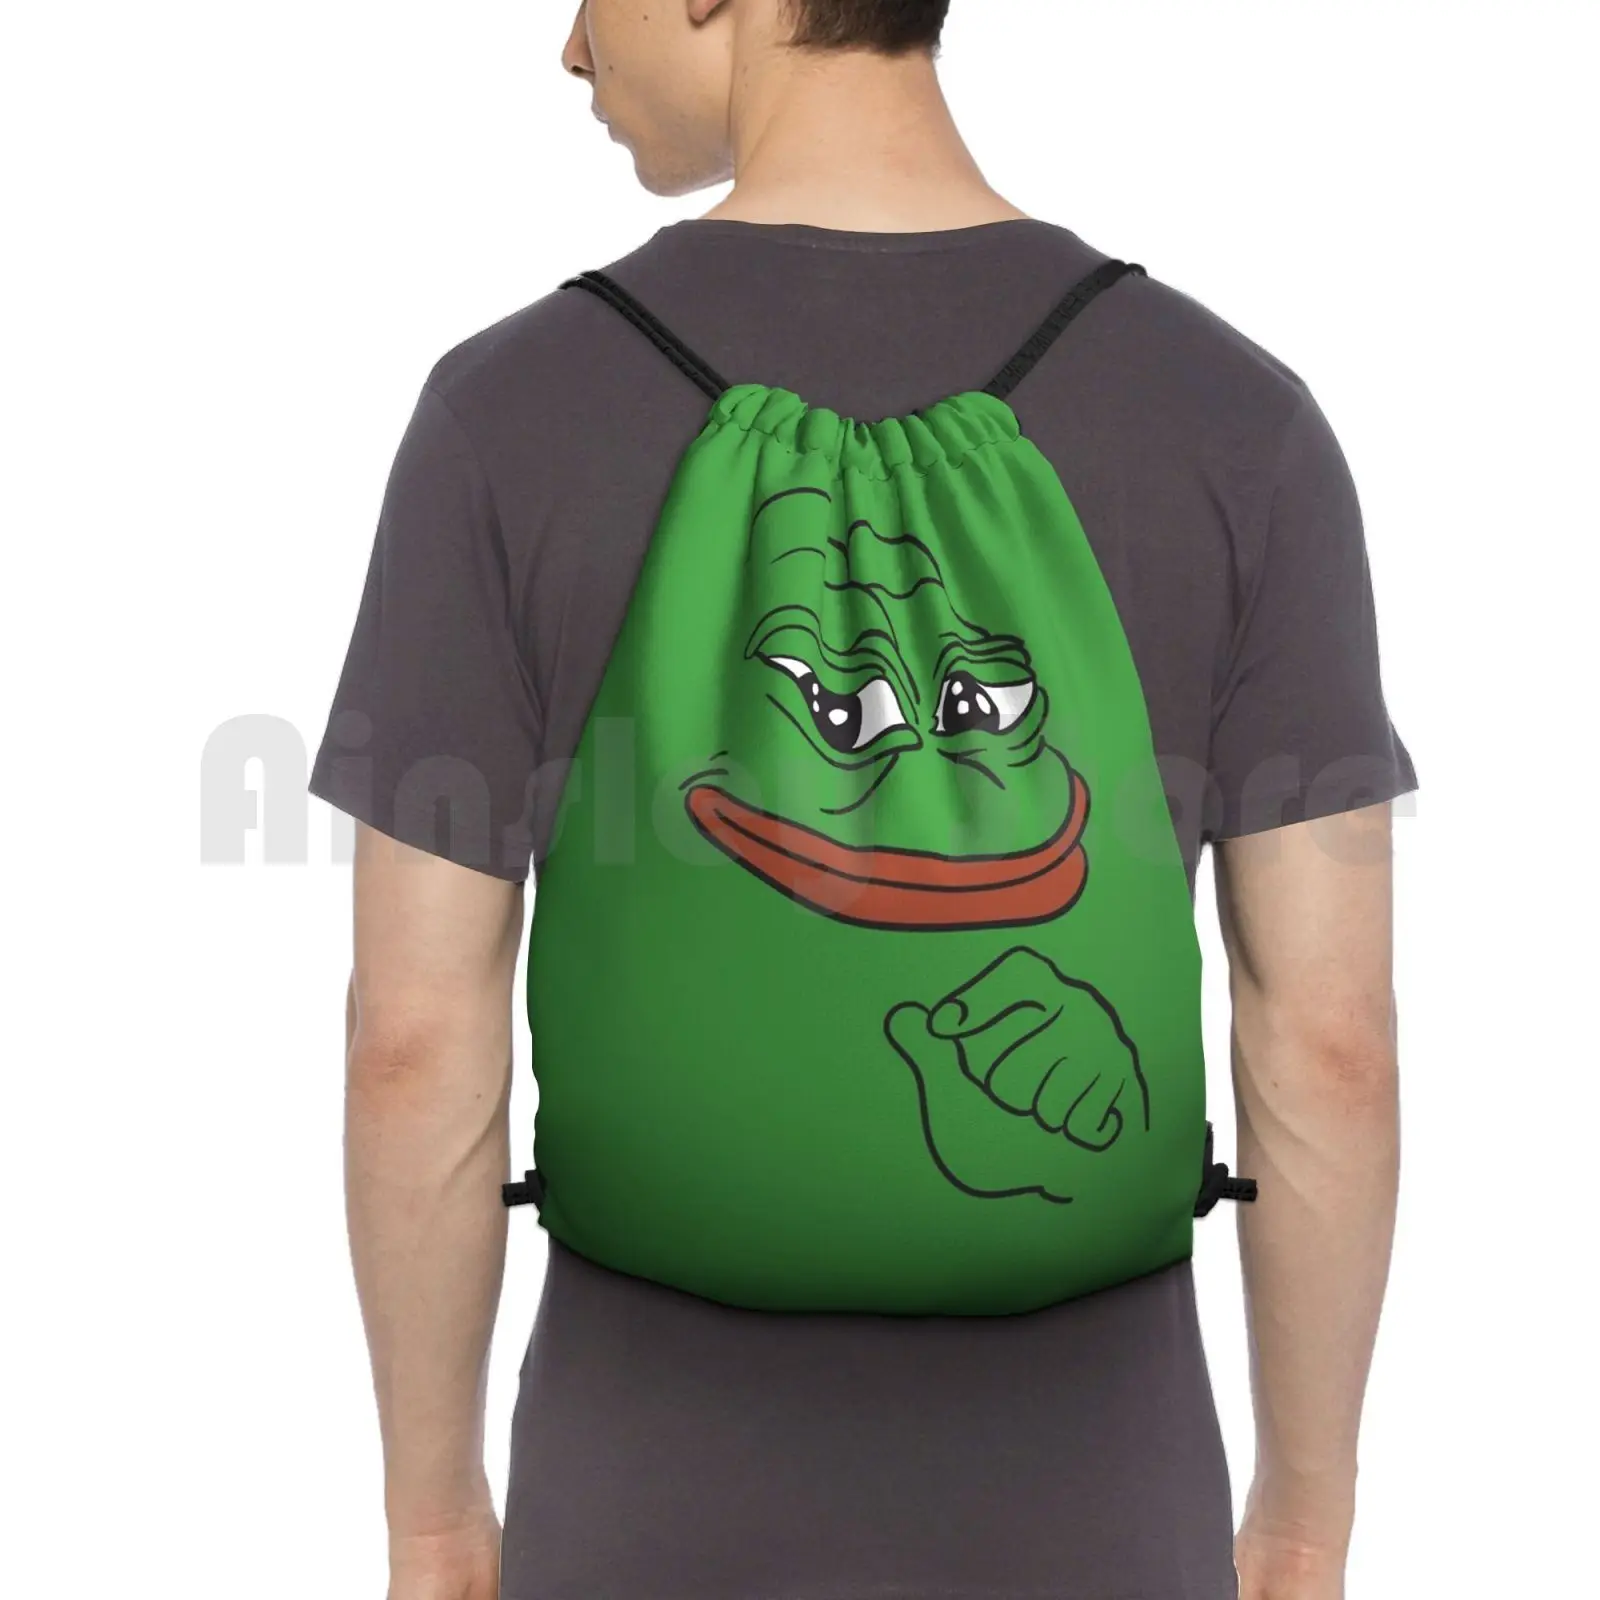 

Smug The Frog Backpack Drawstring Bags Gym Bag Waterproof Smug Frog Green Animal Meme Trump Kek Humor 4Chan Reddit